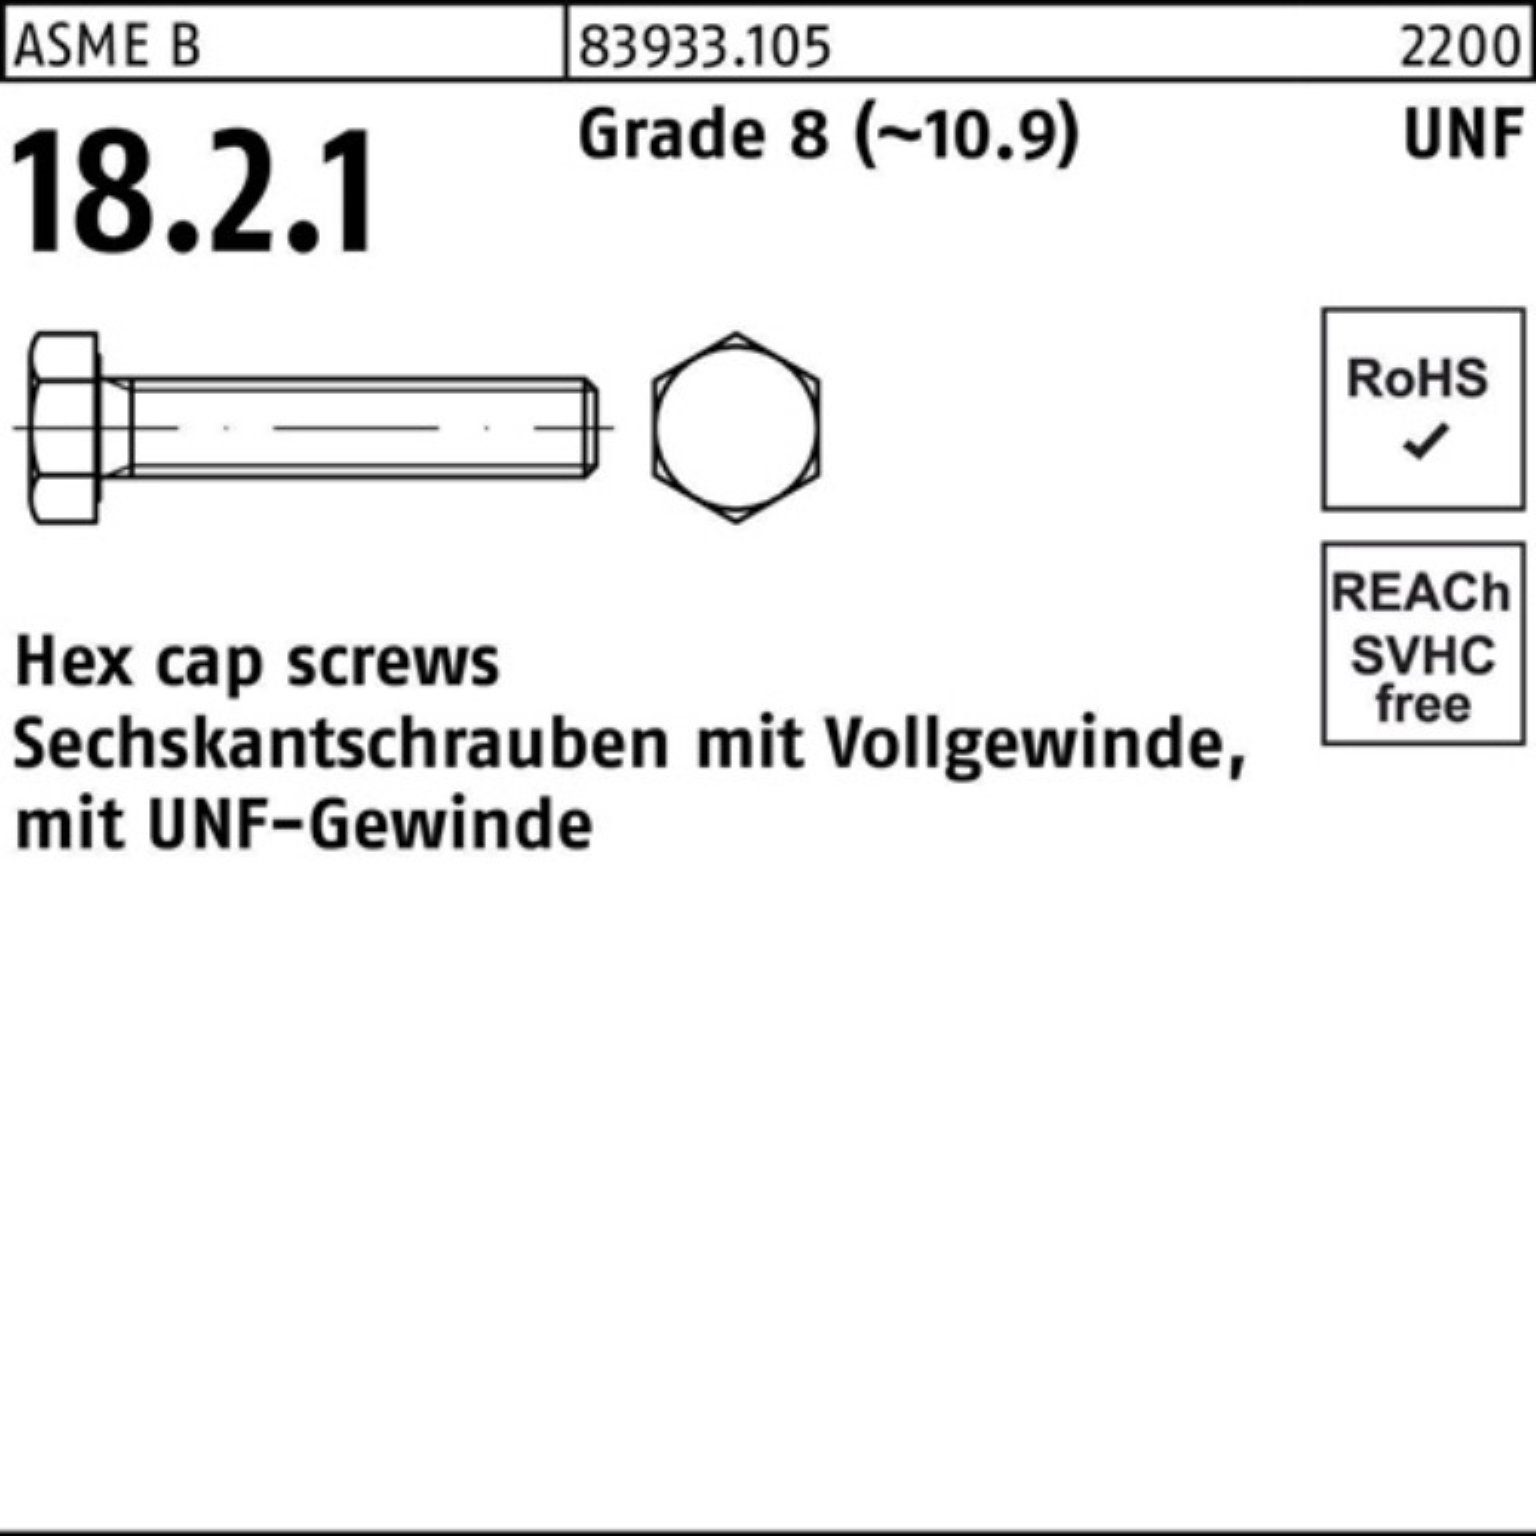 Reyher Sechskantschraube 100er Pack Sechskantschraube R 83933 UNF-Gewinde VG 1/4x 3/4 Grade 8